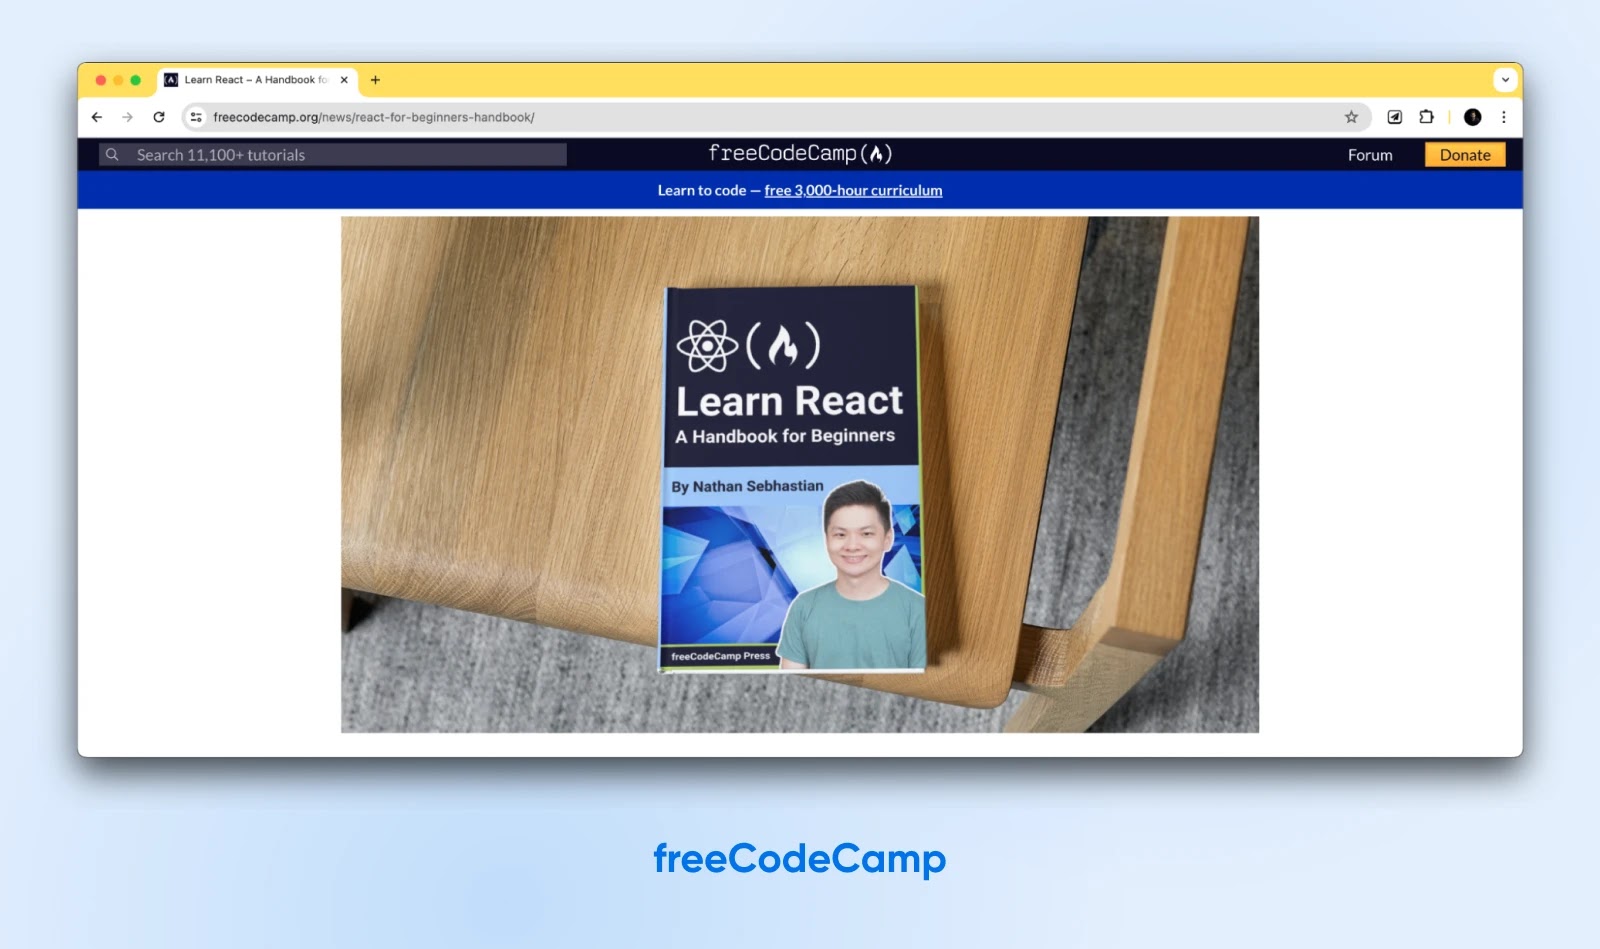 La imagen de portada de "Learn React: A Handbook for Beginners" de freeCodeCamp muestra a un joven sonriente